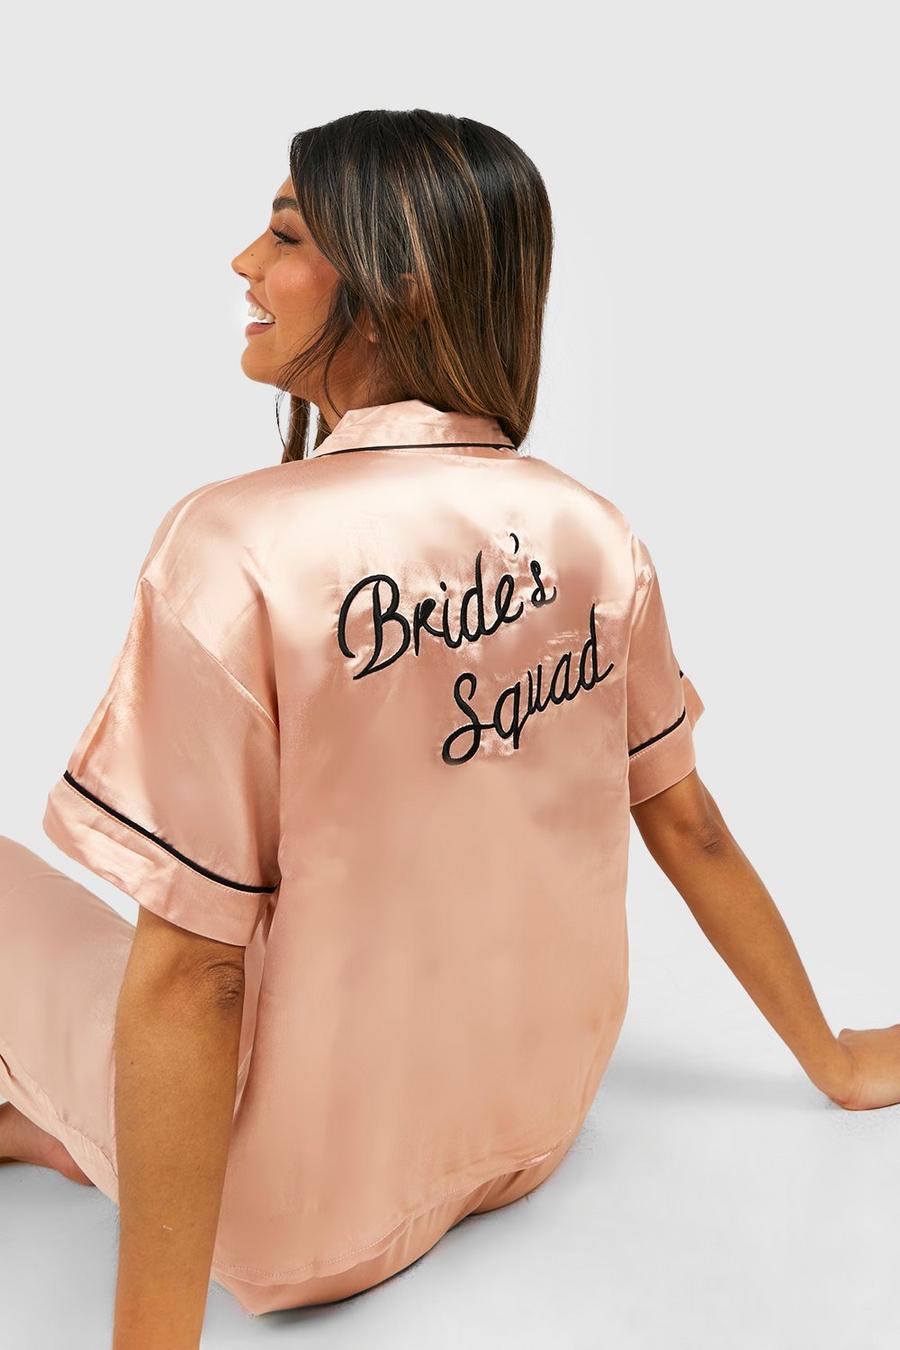 Set pigiama rosa dorato con ricami Bride Squad, Oro rosa metallic